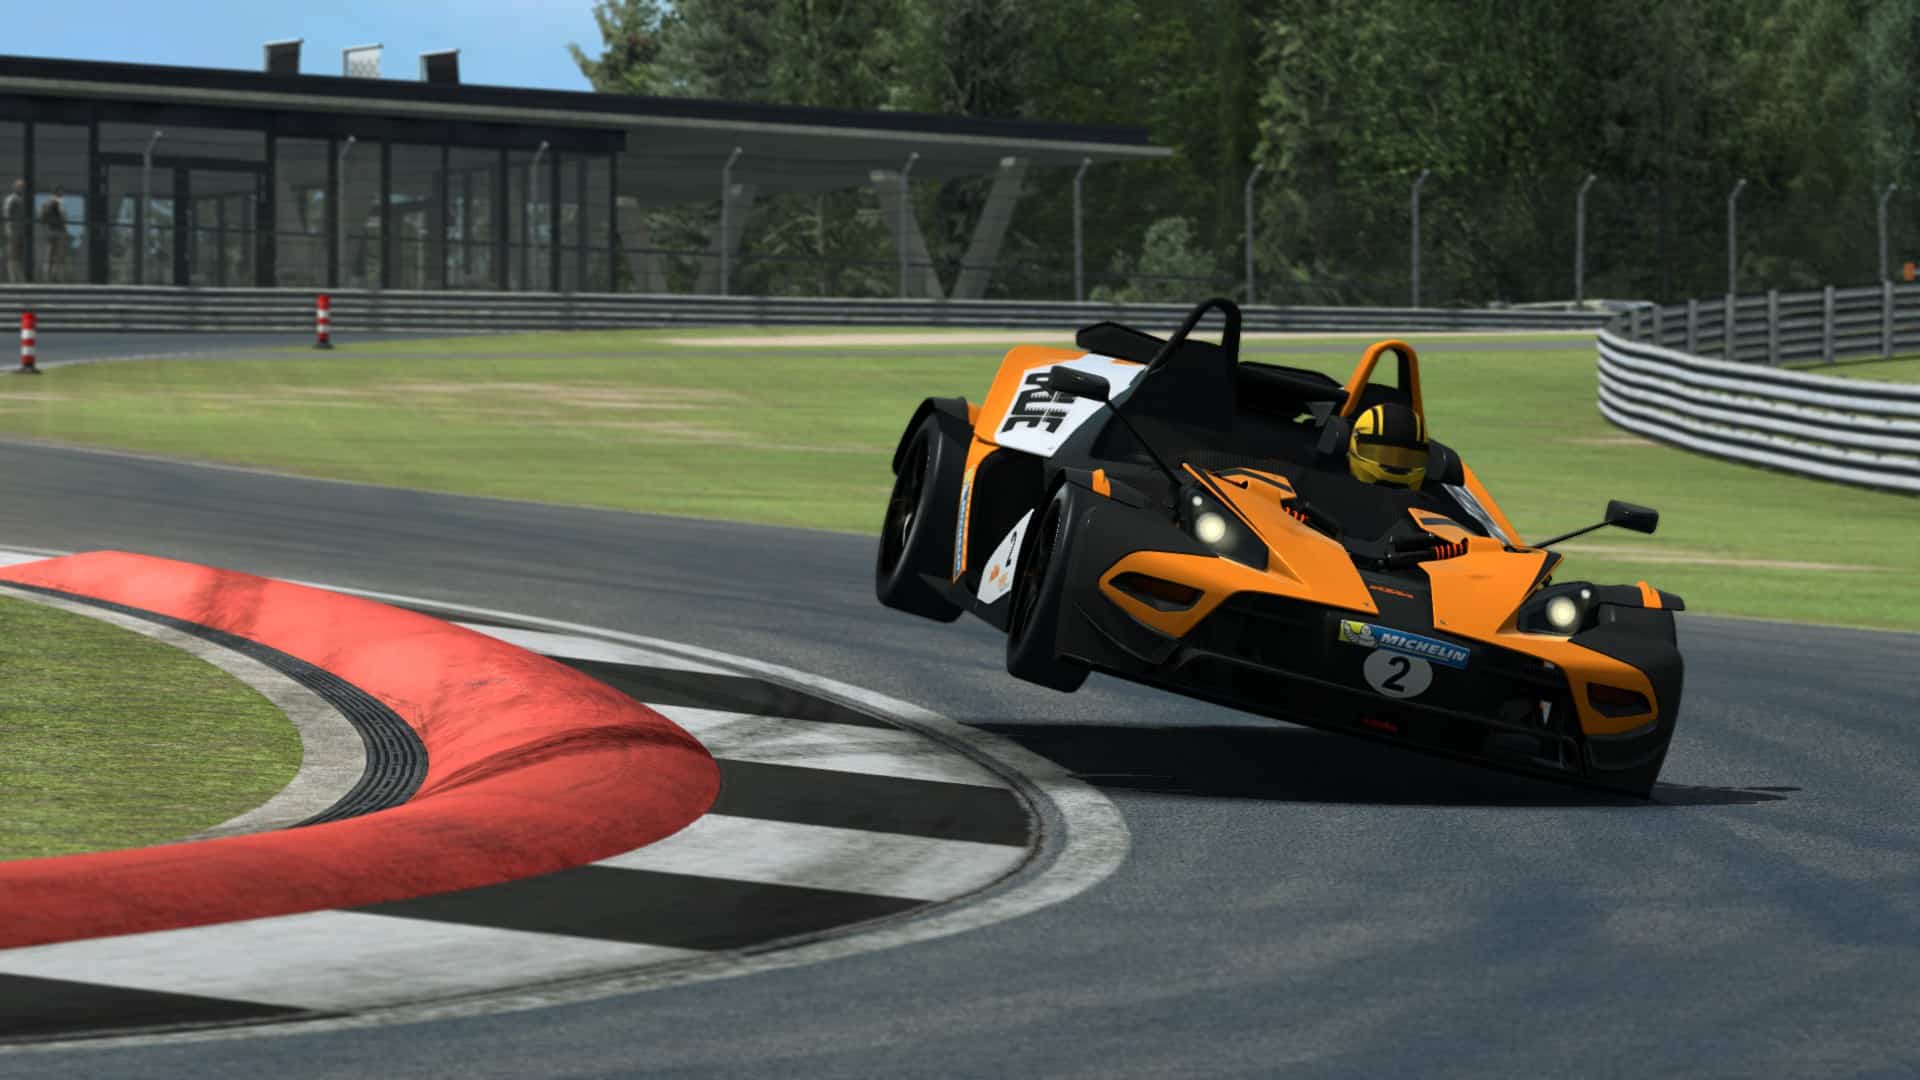 Games like RaceRoom Racing Experience • Games similar to RaceRoom